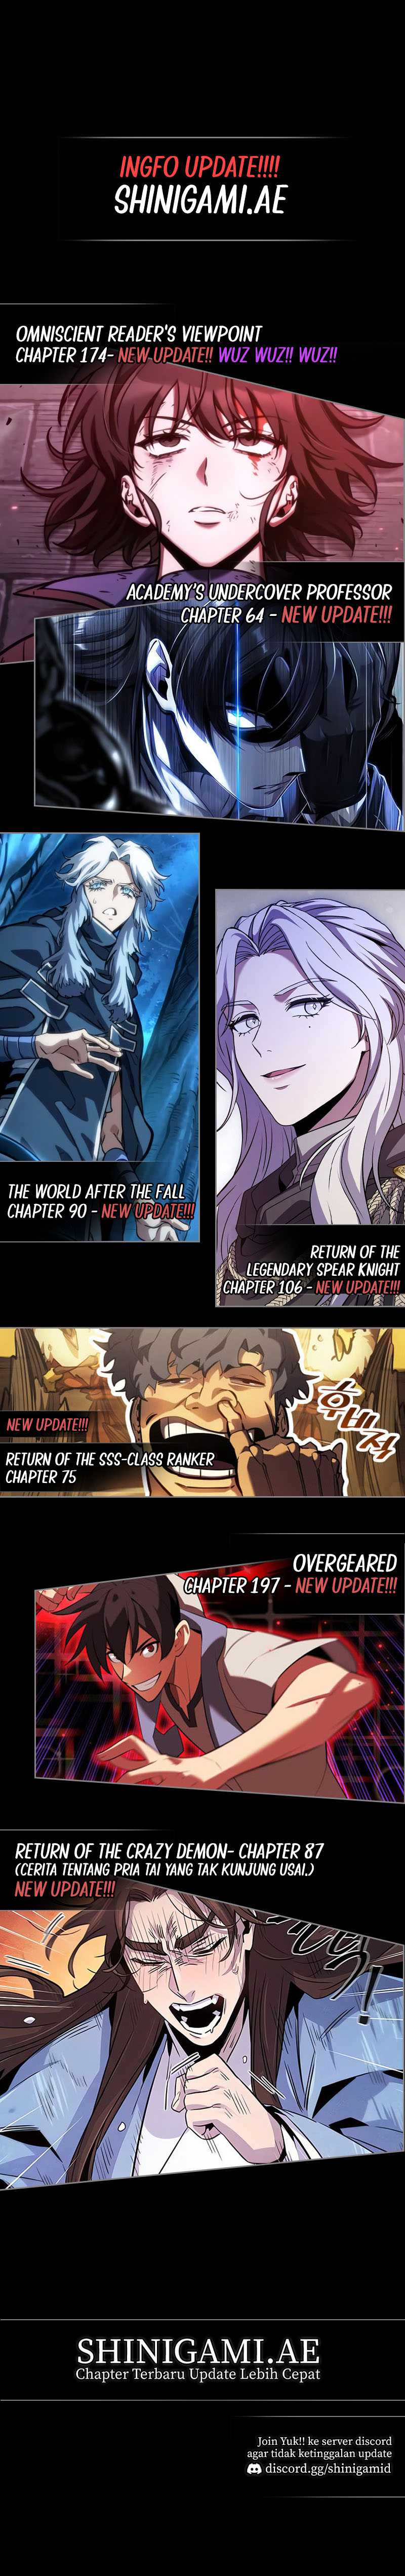 The Villain Of Destiny Chapter 100